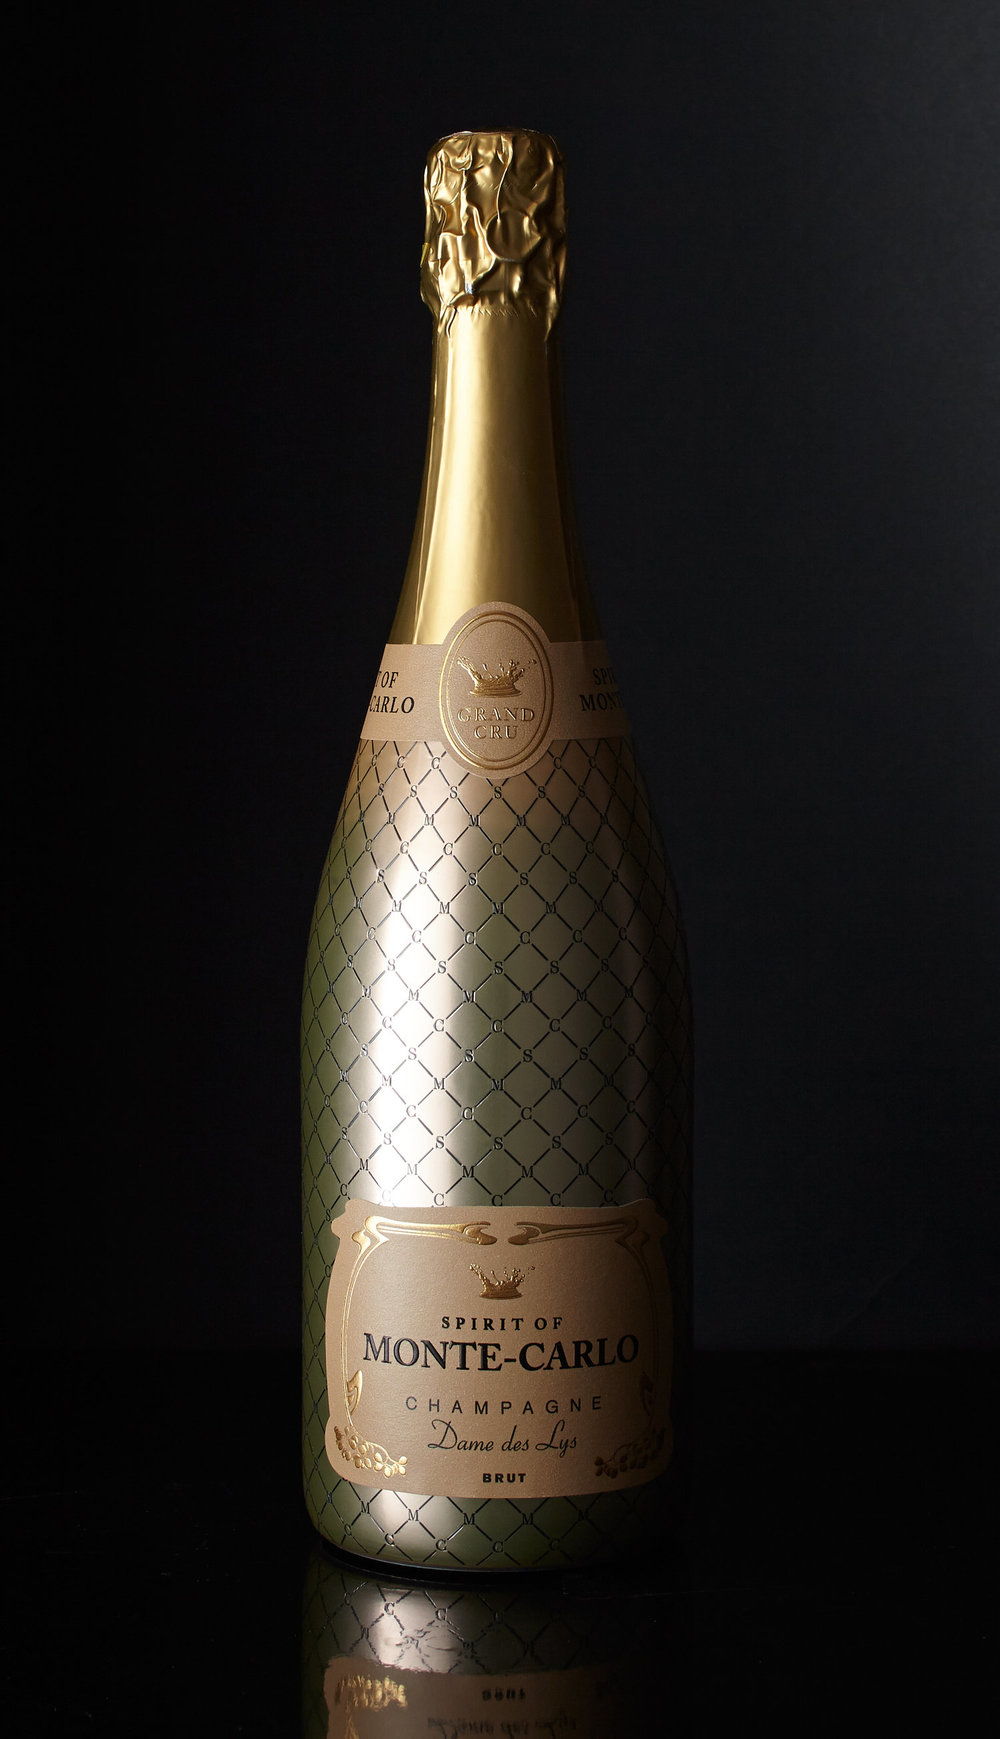 01_Champagne+Montecarlo+still+life7934.jpg